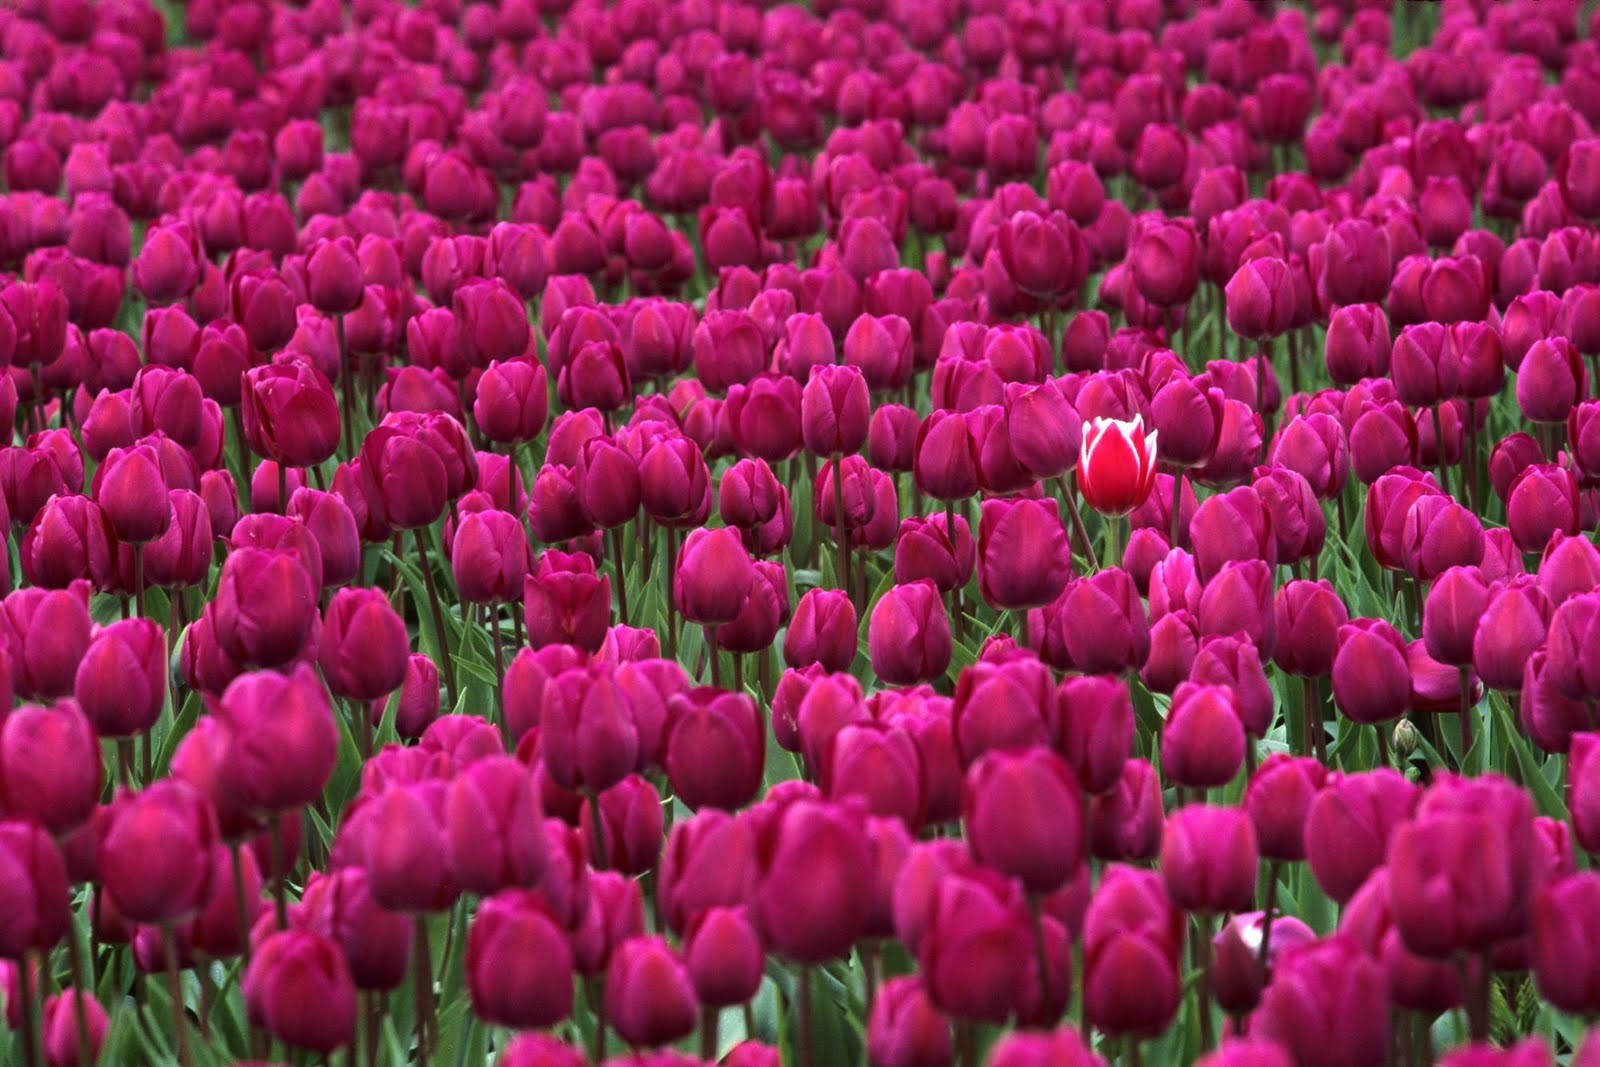 https://blogger.googleusercontent.com/img/b/R29vZ2xl/AVvXsEgTml5st80axsOuzWNqptFiebRDE4eL1Mns21IdF4FwqmQCdQrZBL1Crsx4Bfr3DrB5bsYEG3PImaJcrw98QH8VMQ94nZWG4tQBrhYf6sUN_OmElNTyC4IdbpQ7sBWVXFrqUa5sKOaVh8HT/s1600/very+beautiful+and+lovely+tulips%252C+HD+wallpapers+tulips+%252810%2529.jpg